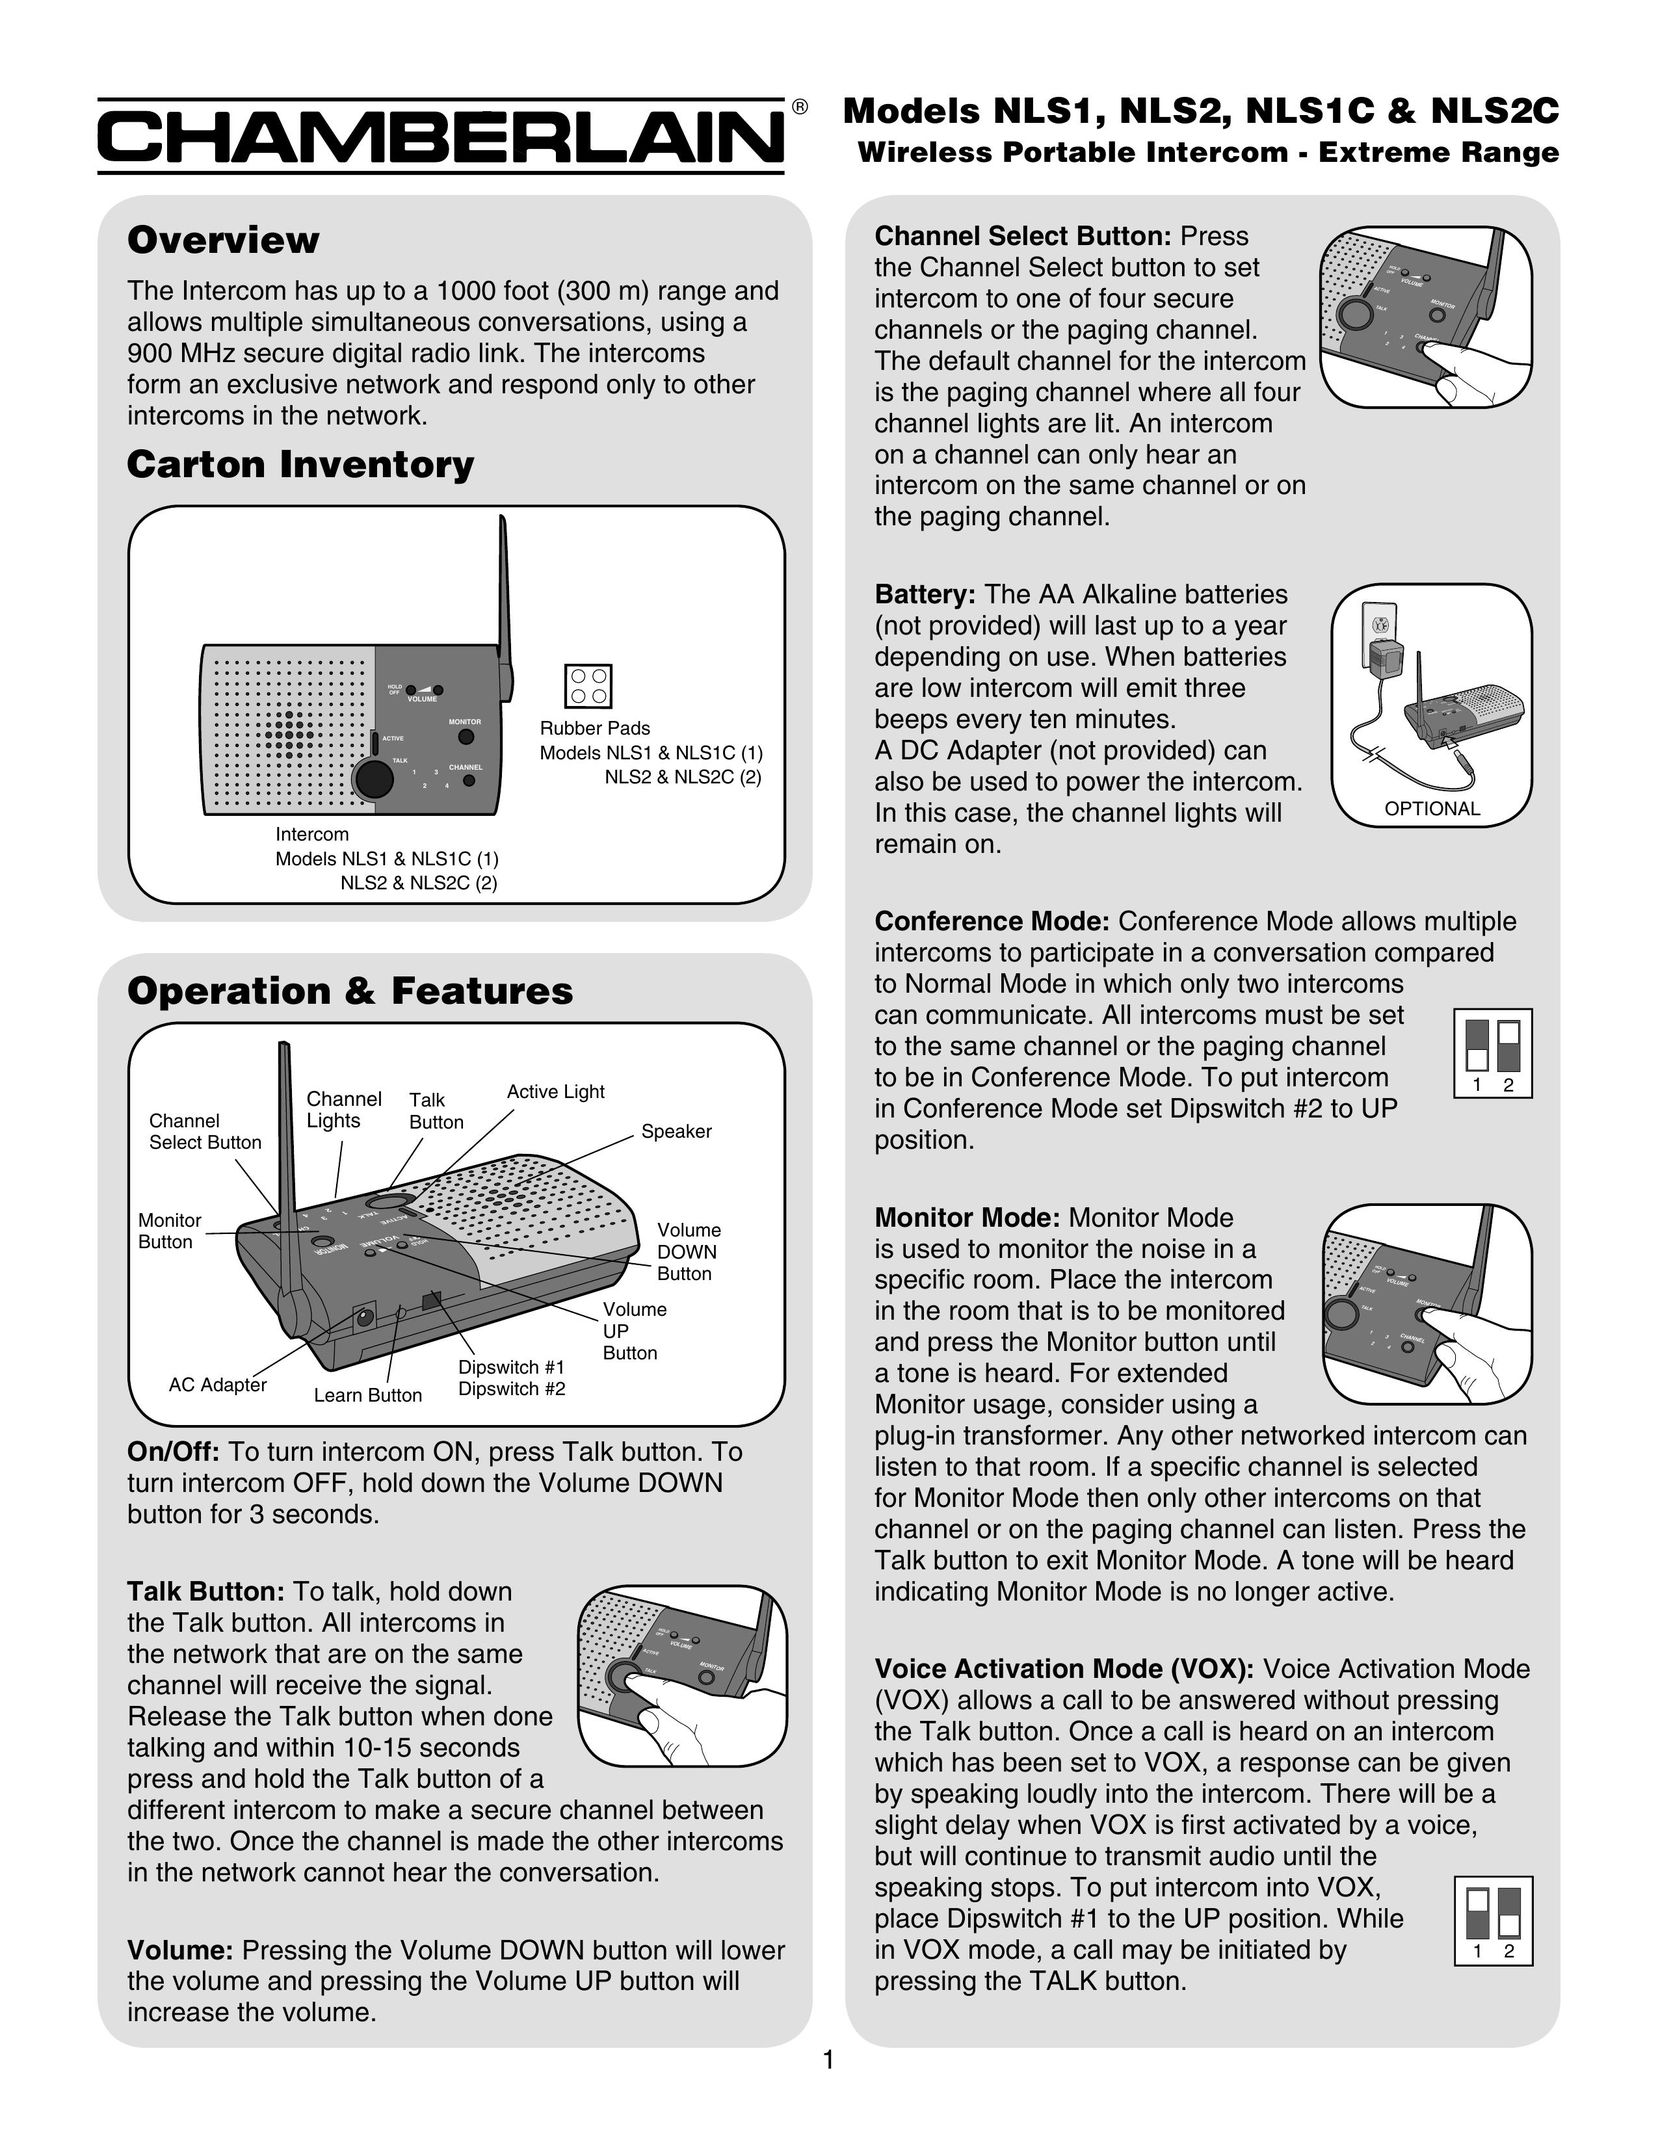 Chamberlain NLS2C Intercom System User Manual